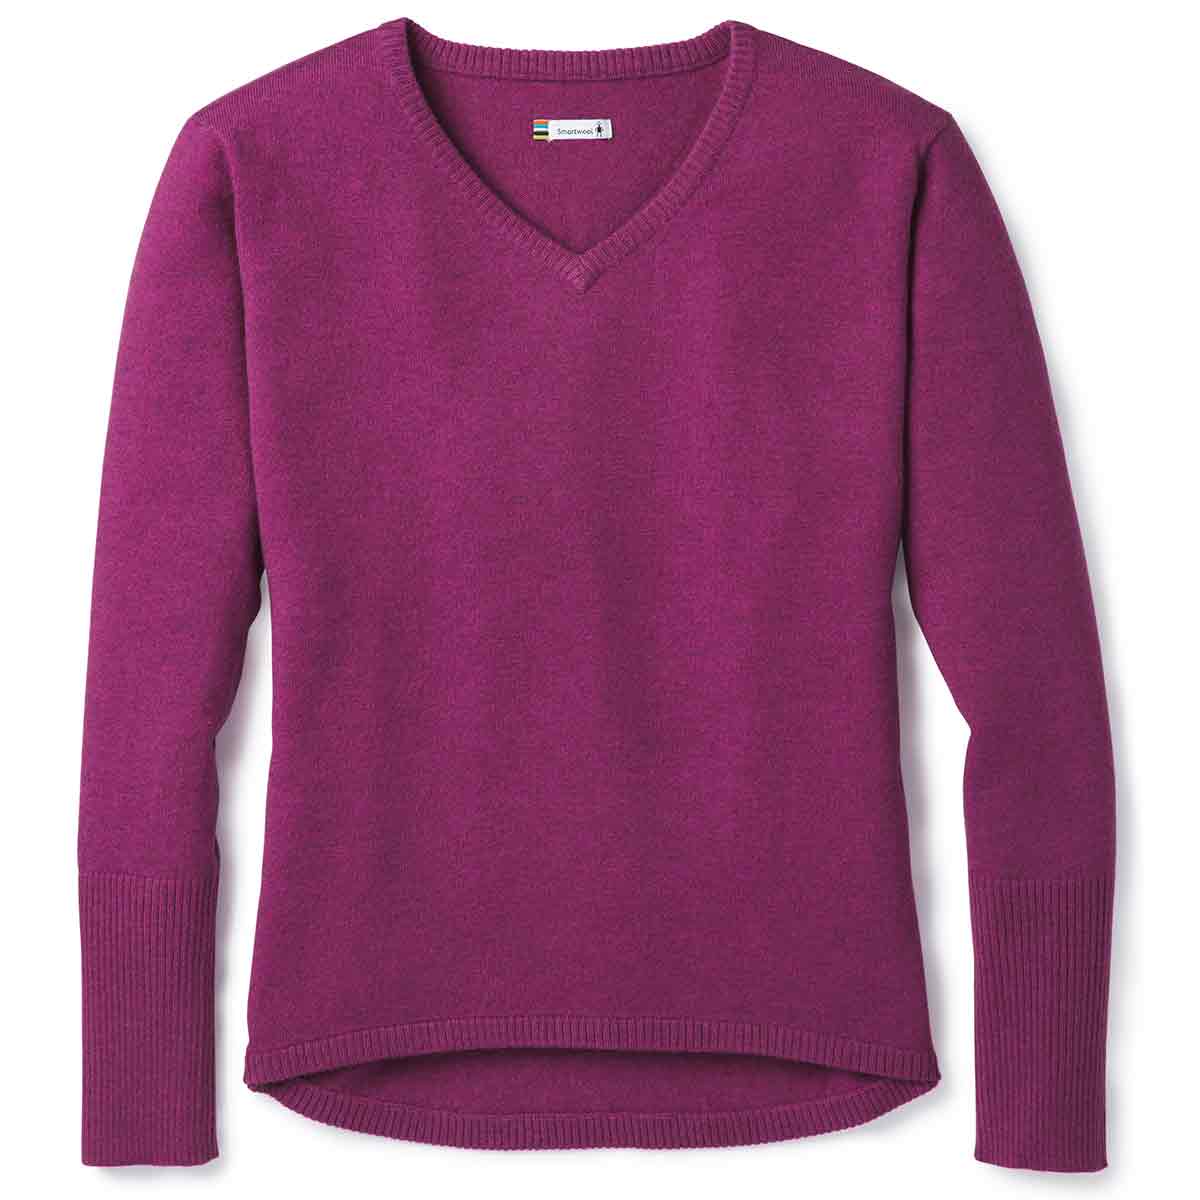 Smartwool Women's Shadow Pine V-Neck Sweater - Purple, M